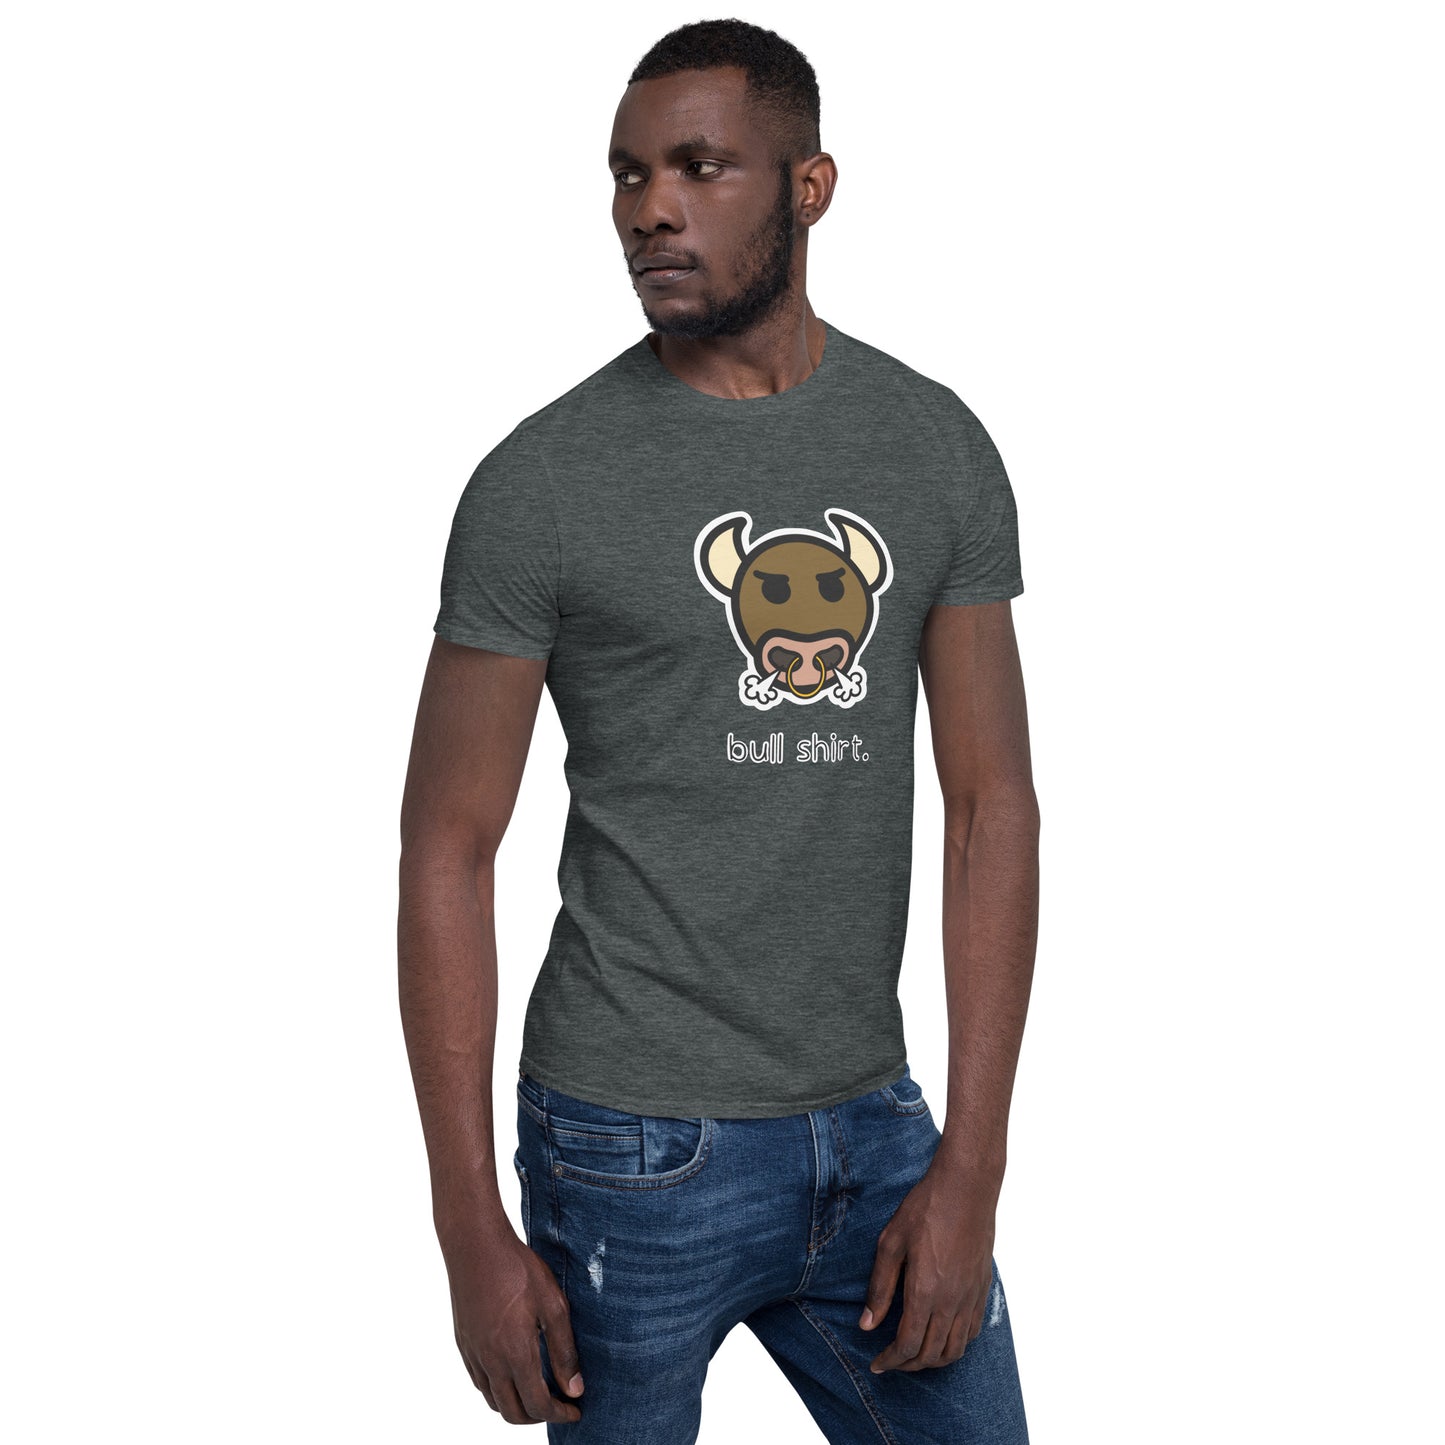 “Bull Shirt” Short-Sleeve Unisex T-Shirt